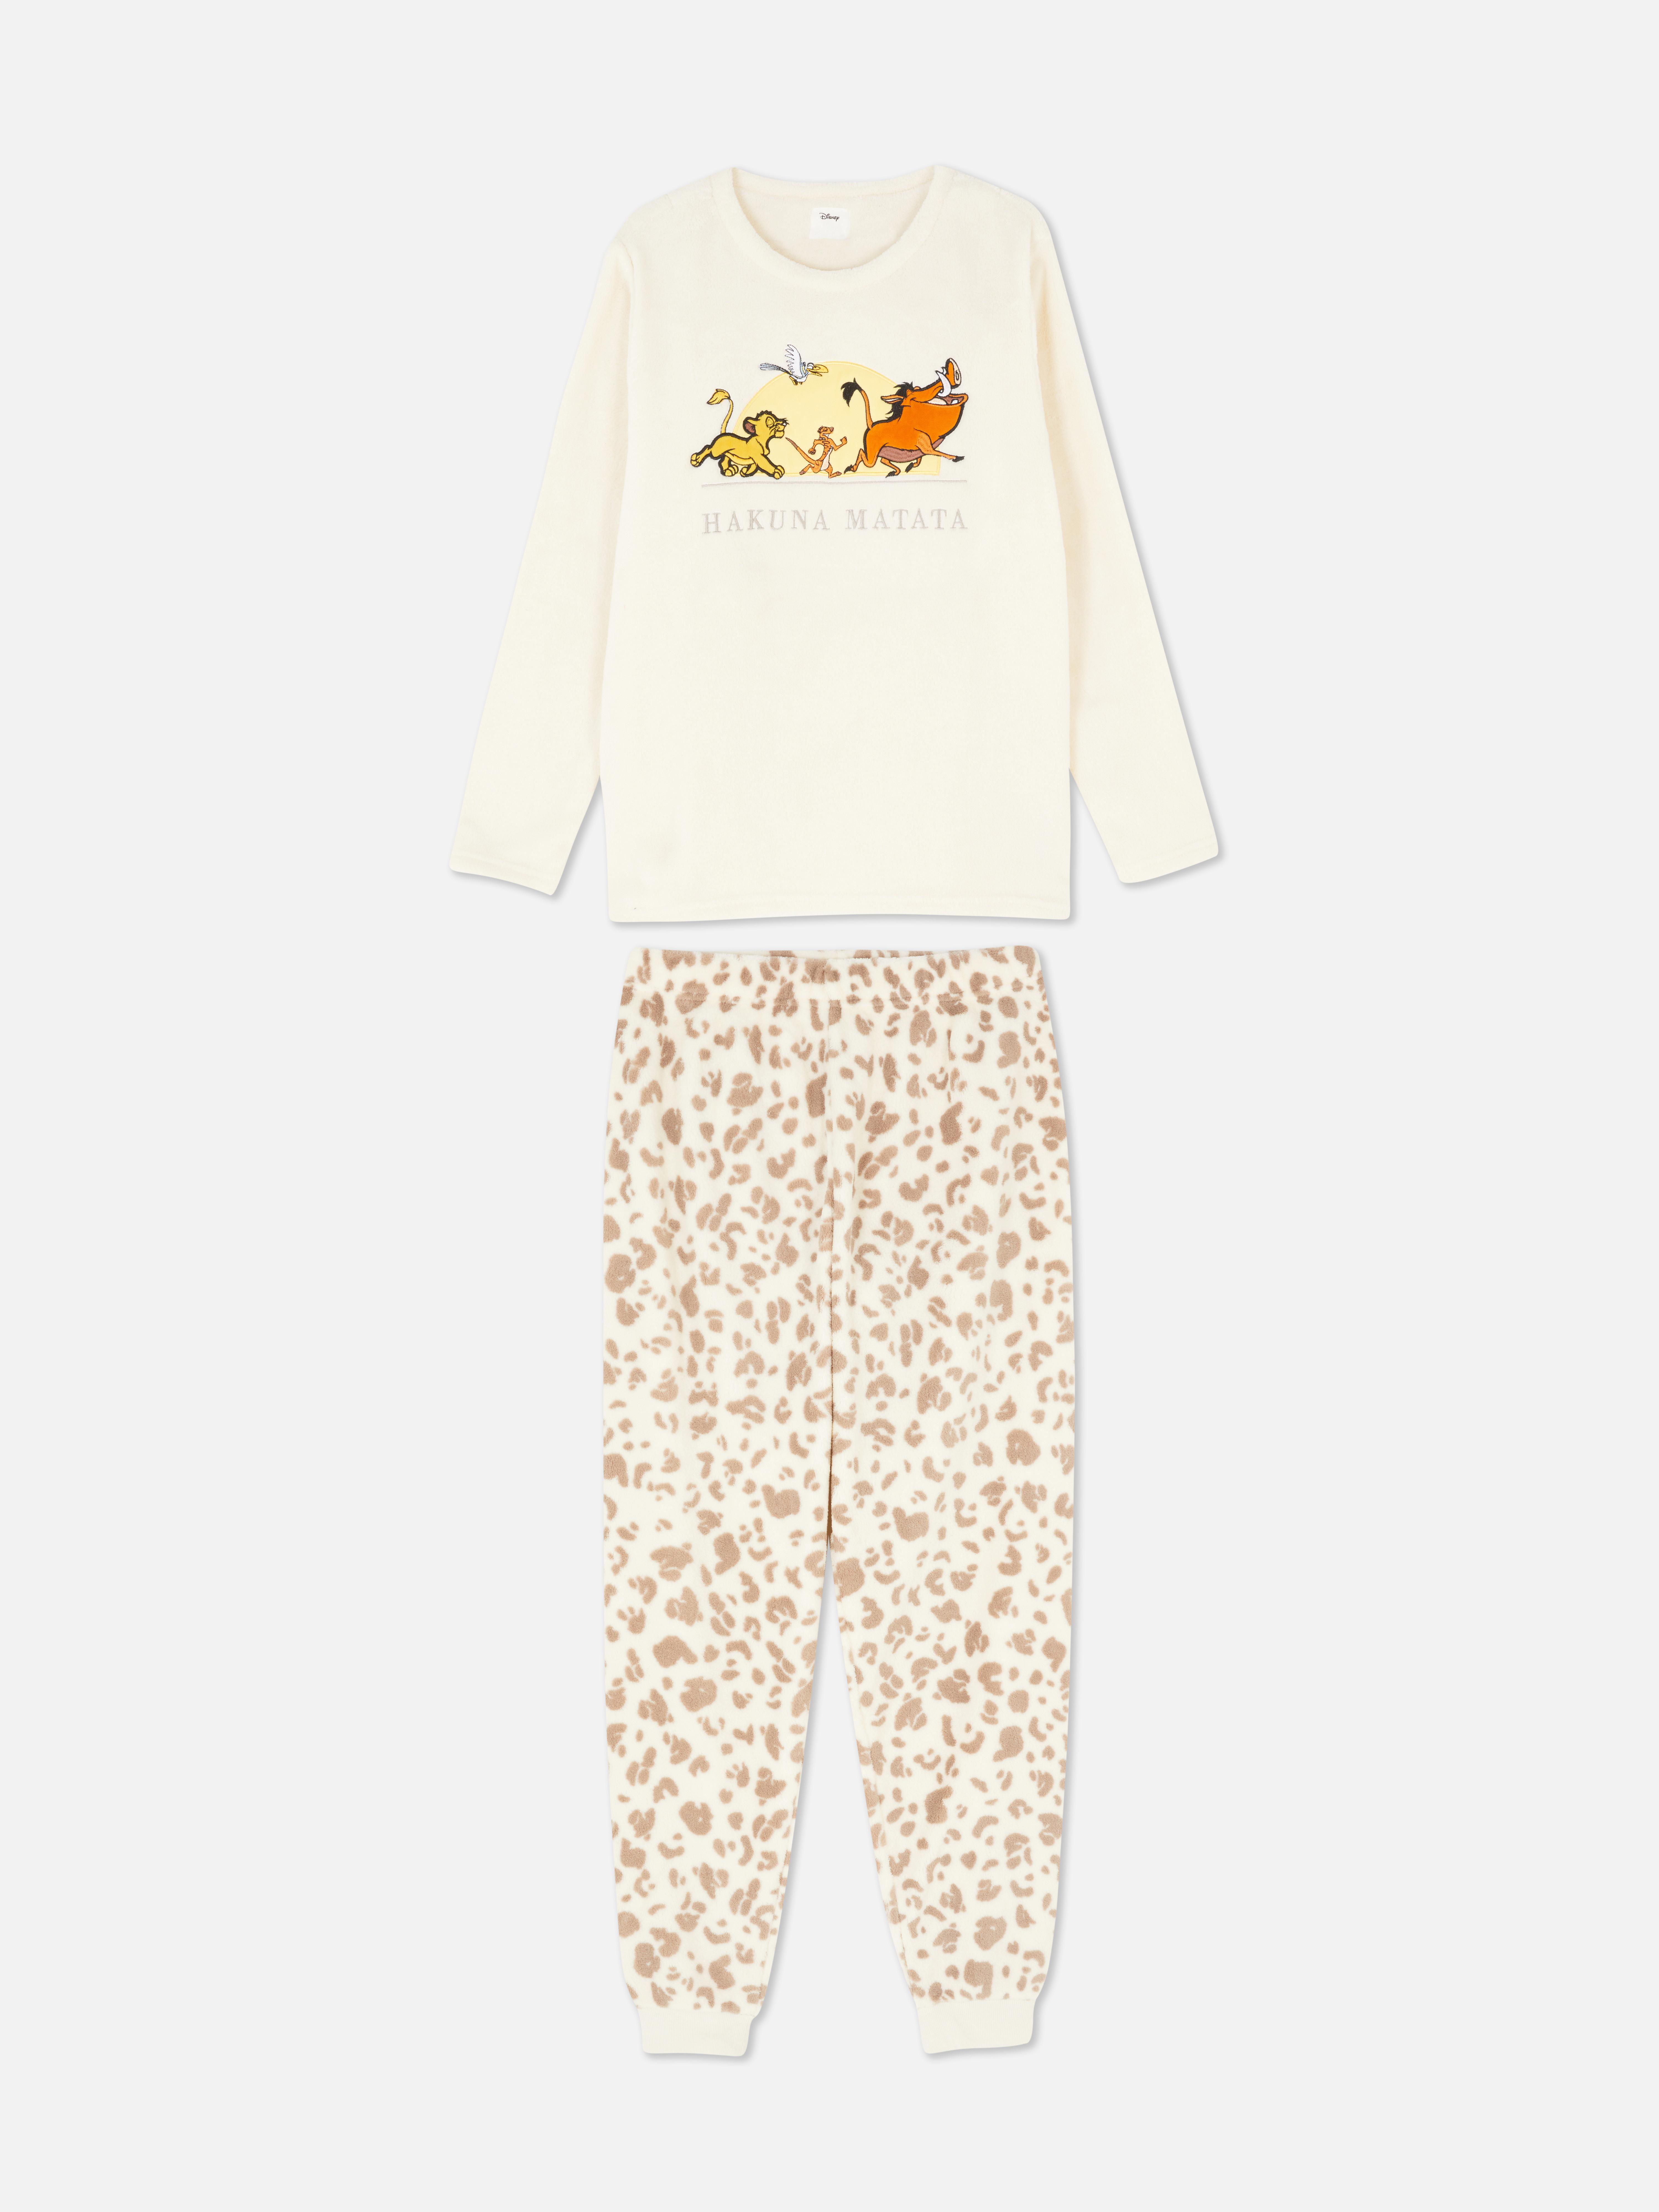 Pijama malha polar personagem Disney